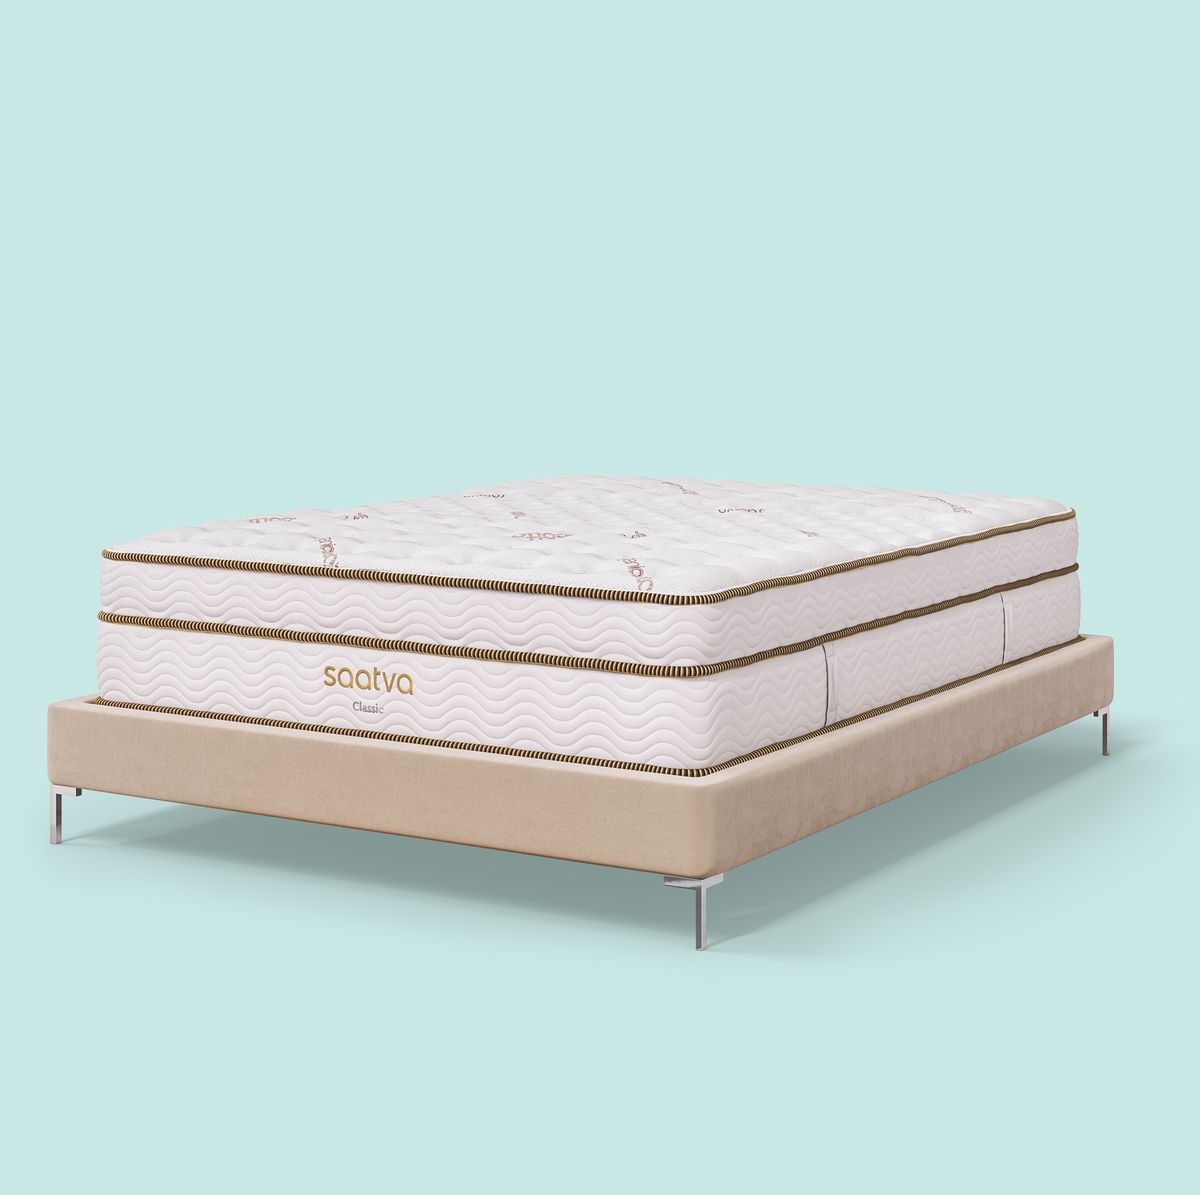 saatva classic mattress the best overall bed a mattress on a beige bed frame